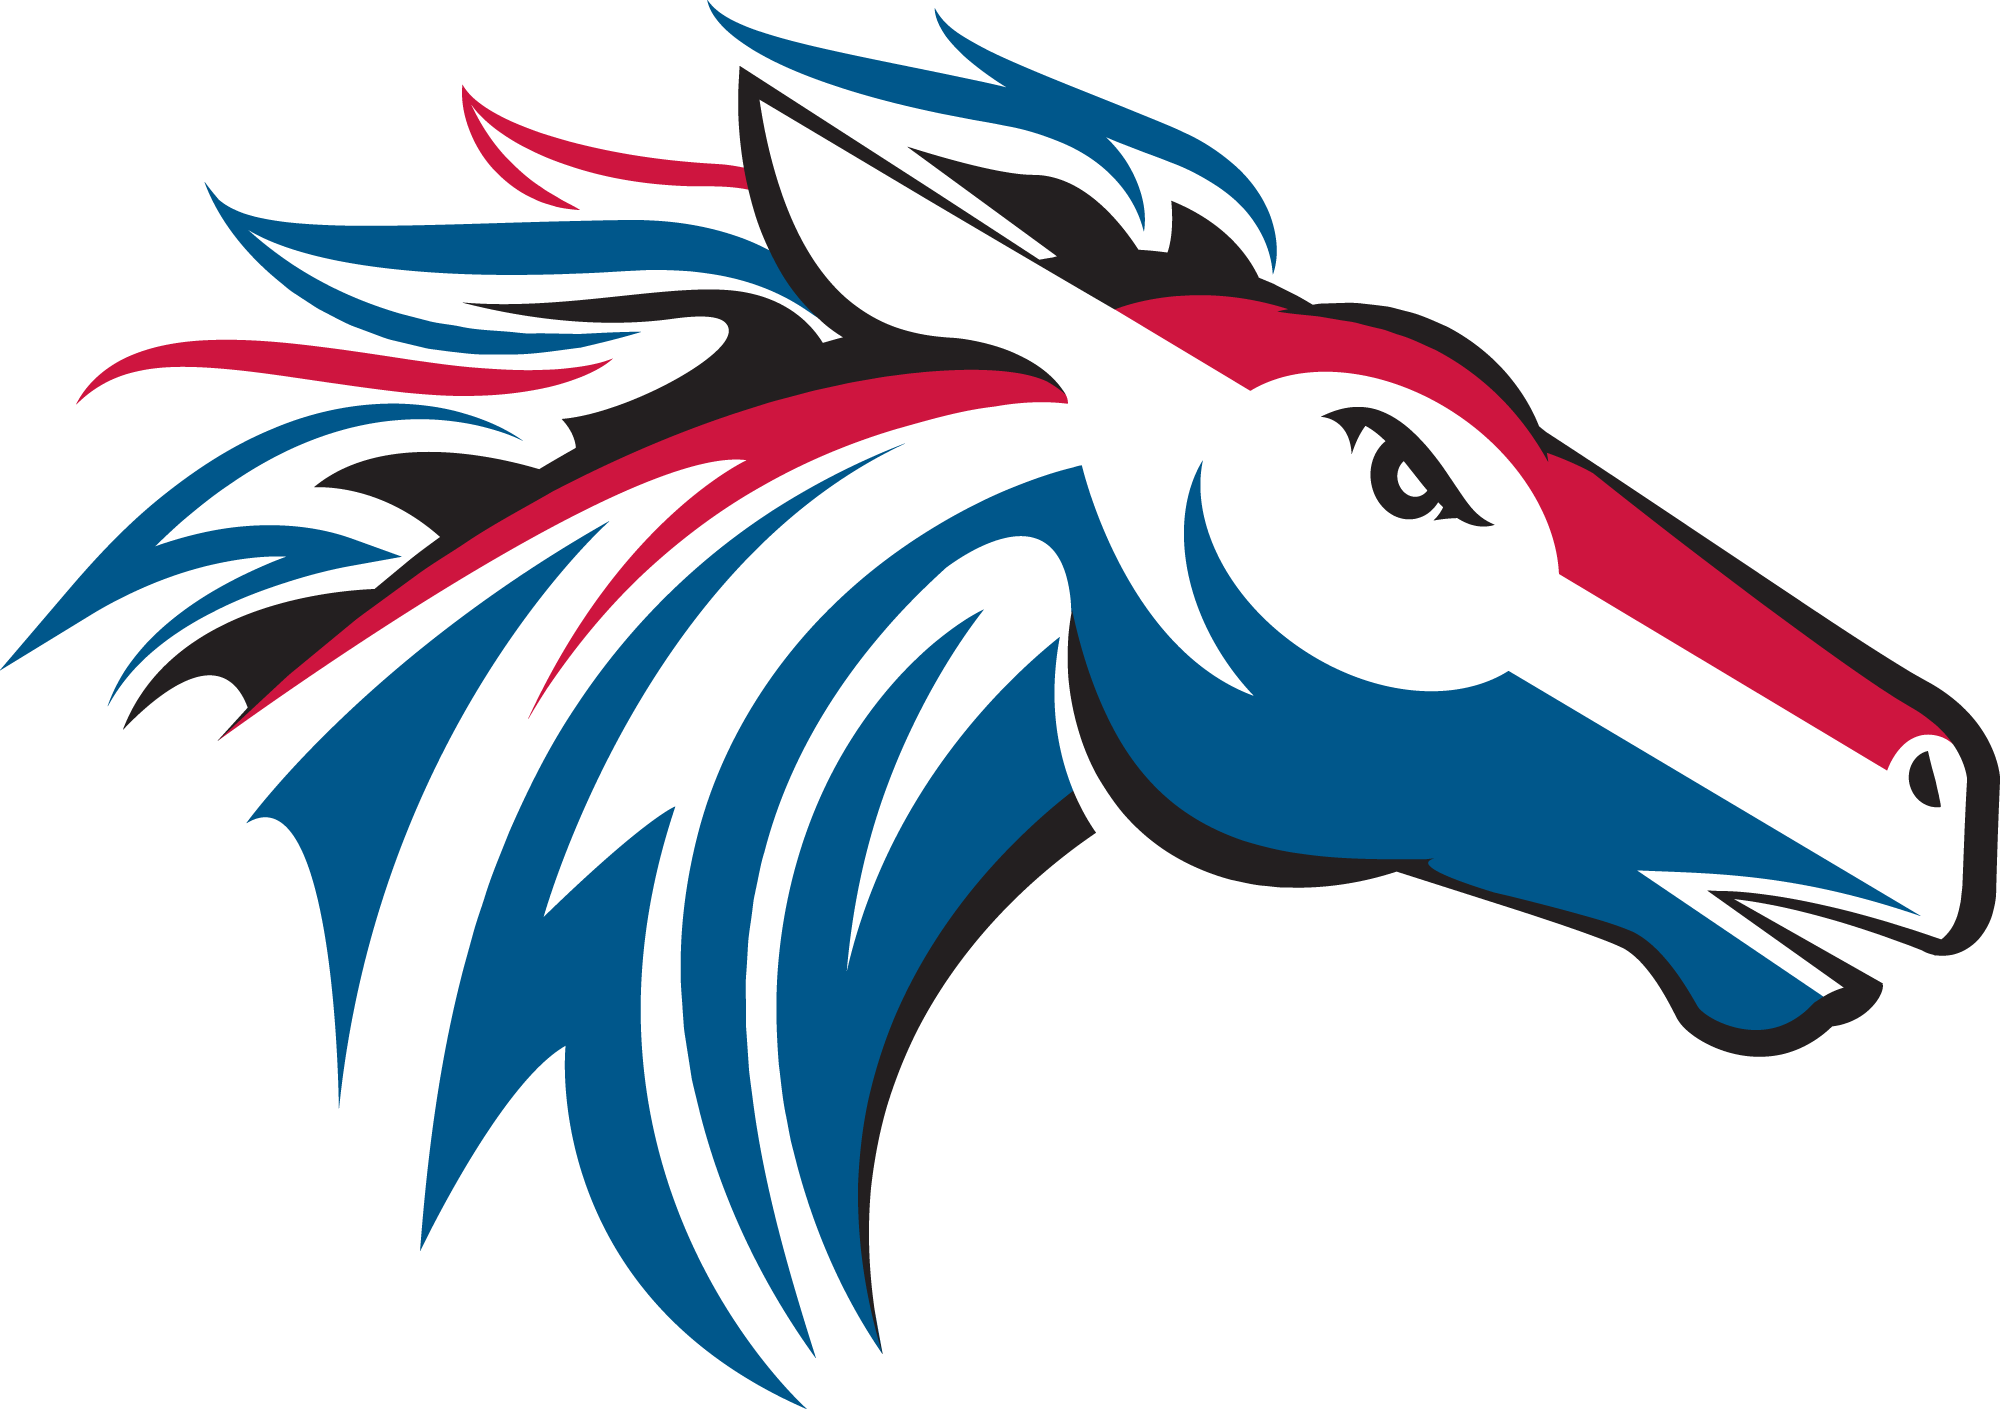 Ashton Ranch Mustang Logo - Ashton Ranch Elementary School (2000x1409)